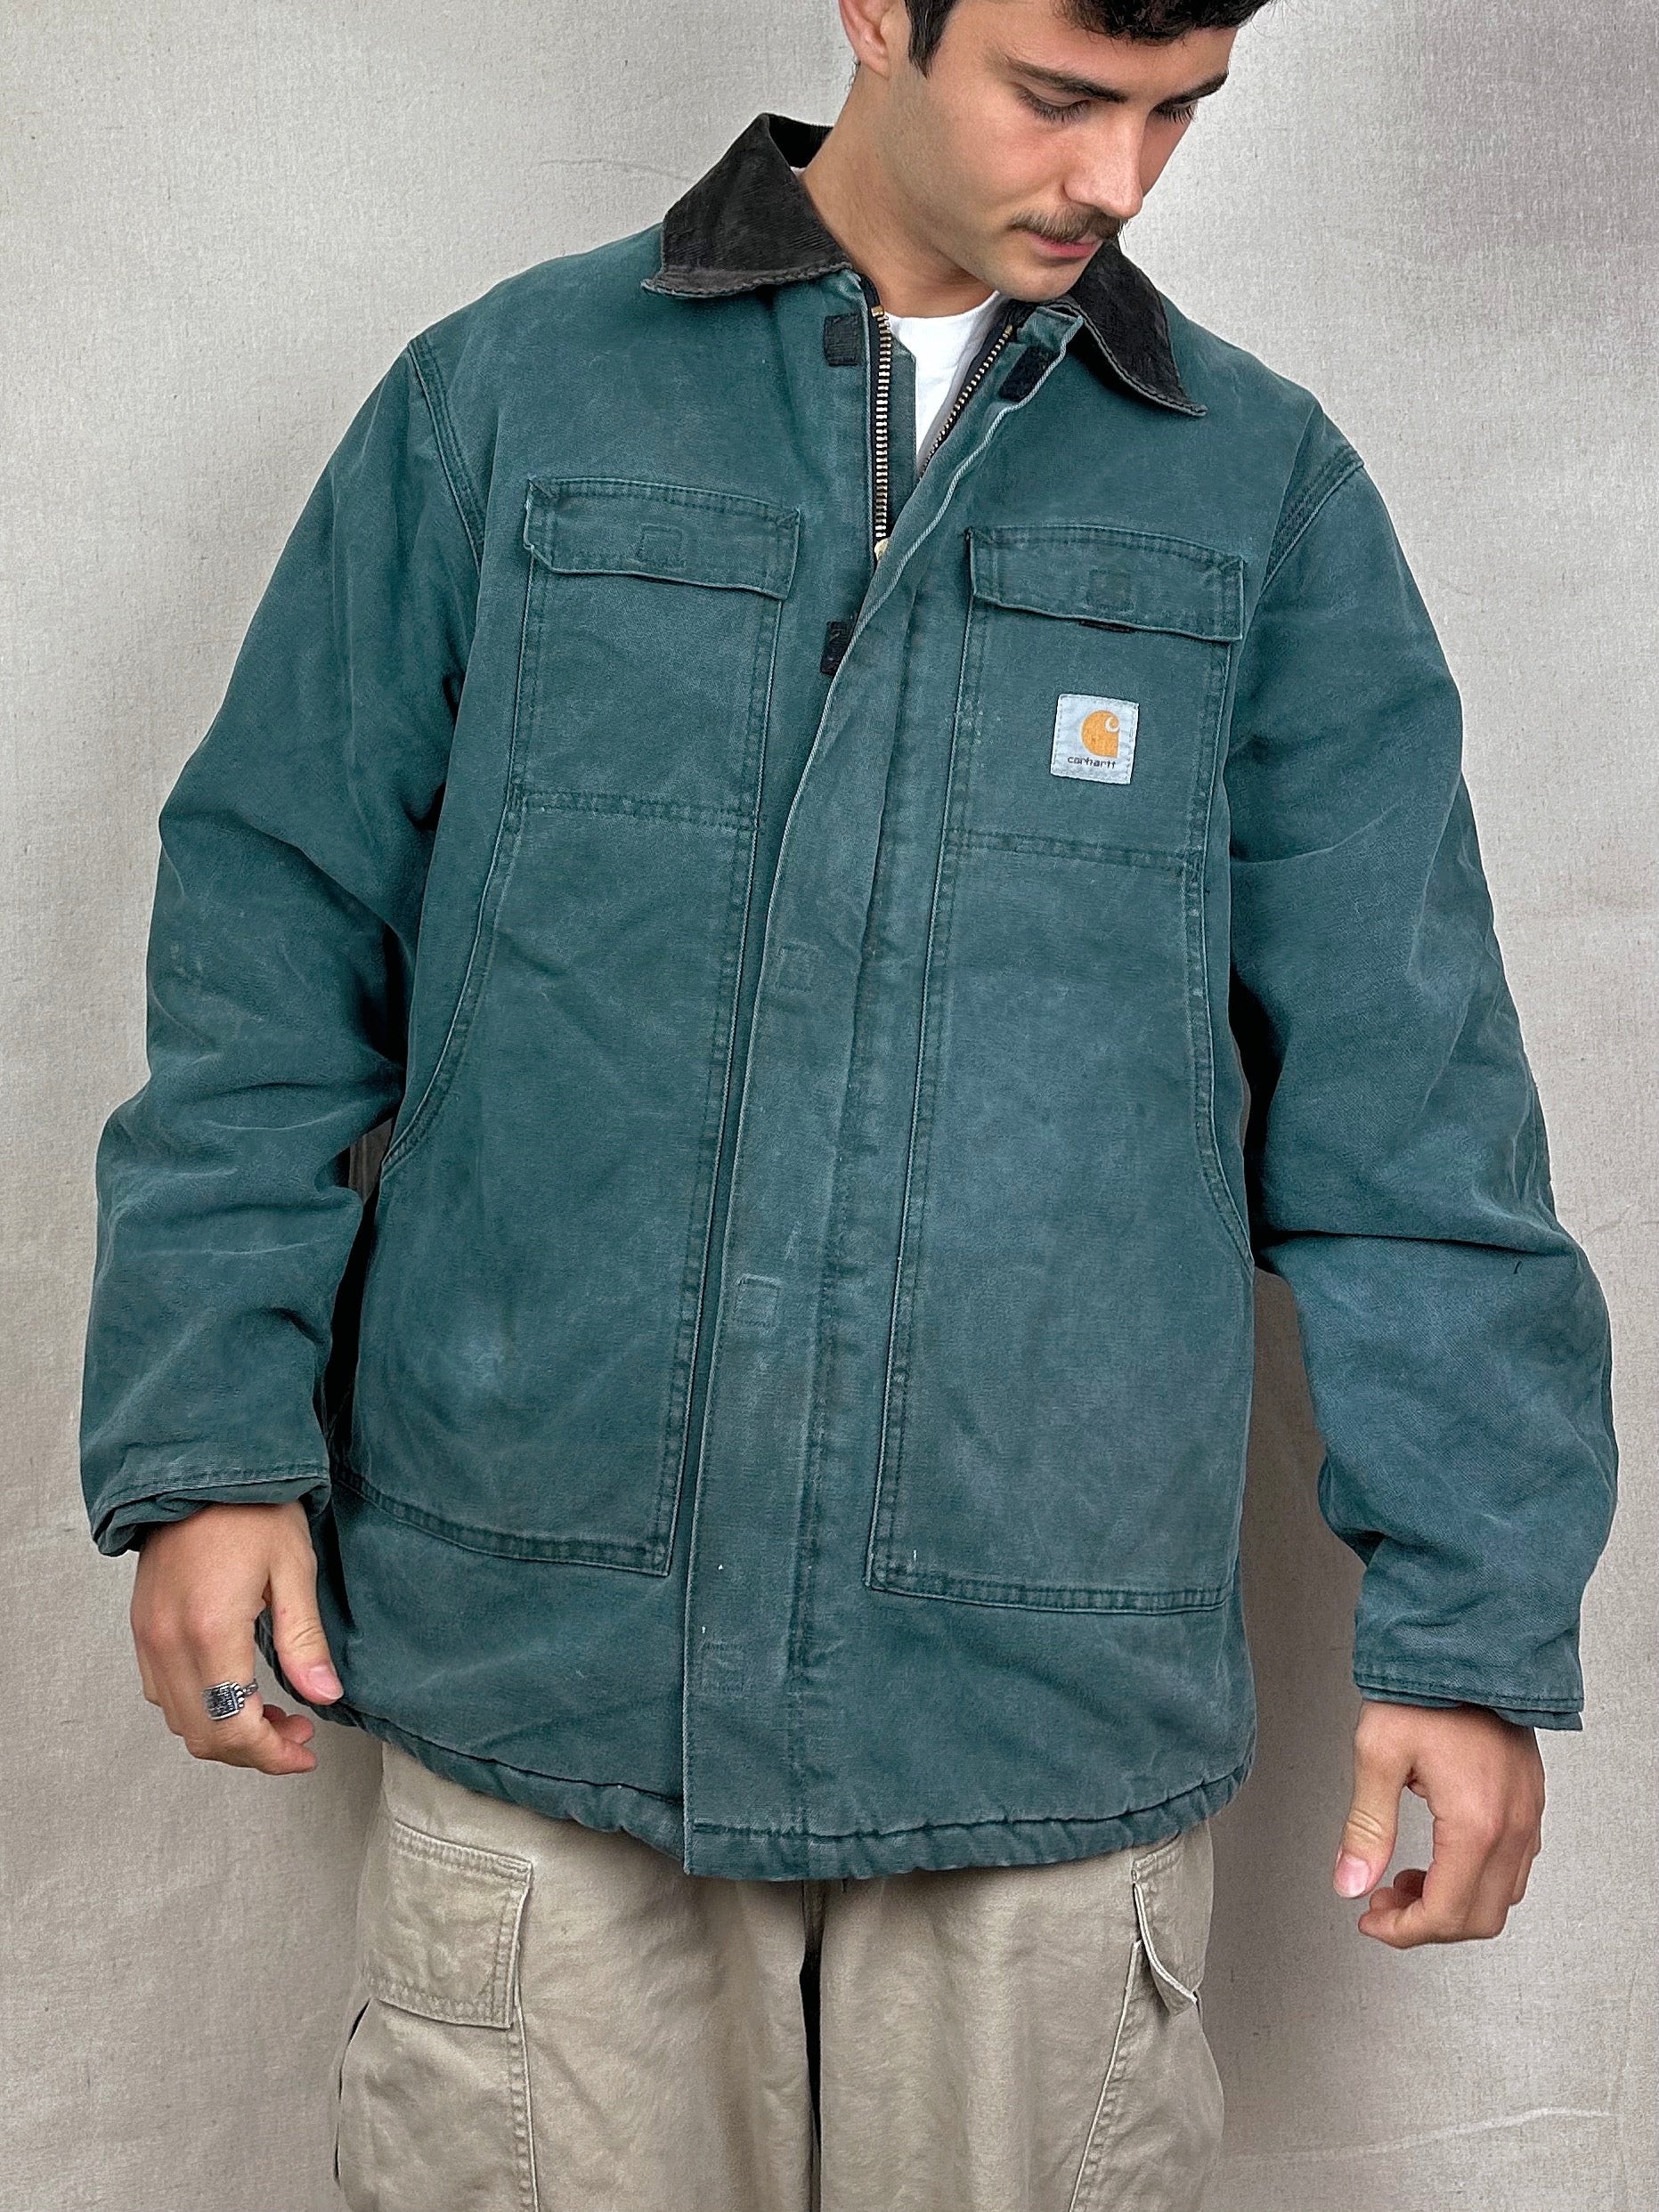 素材100%COTTONUS CARHARTT HEAVY WEIGHT CORDUROY jacket